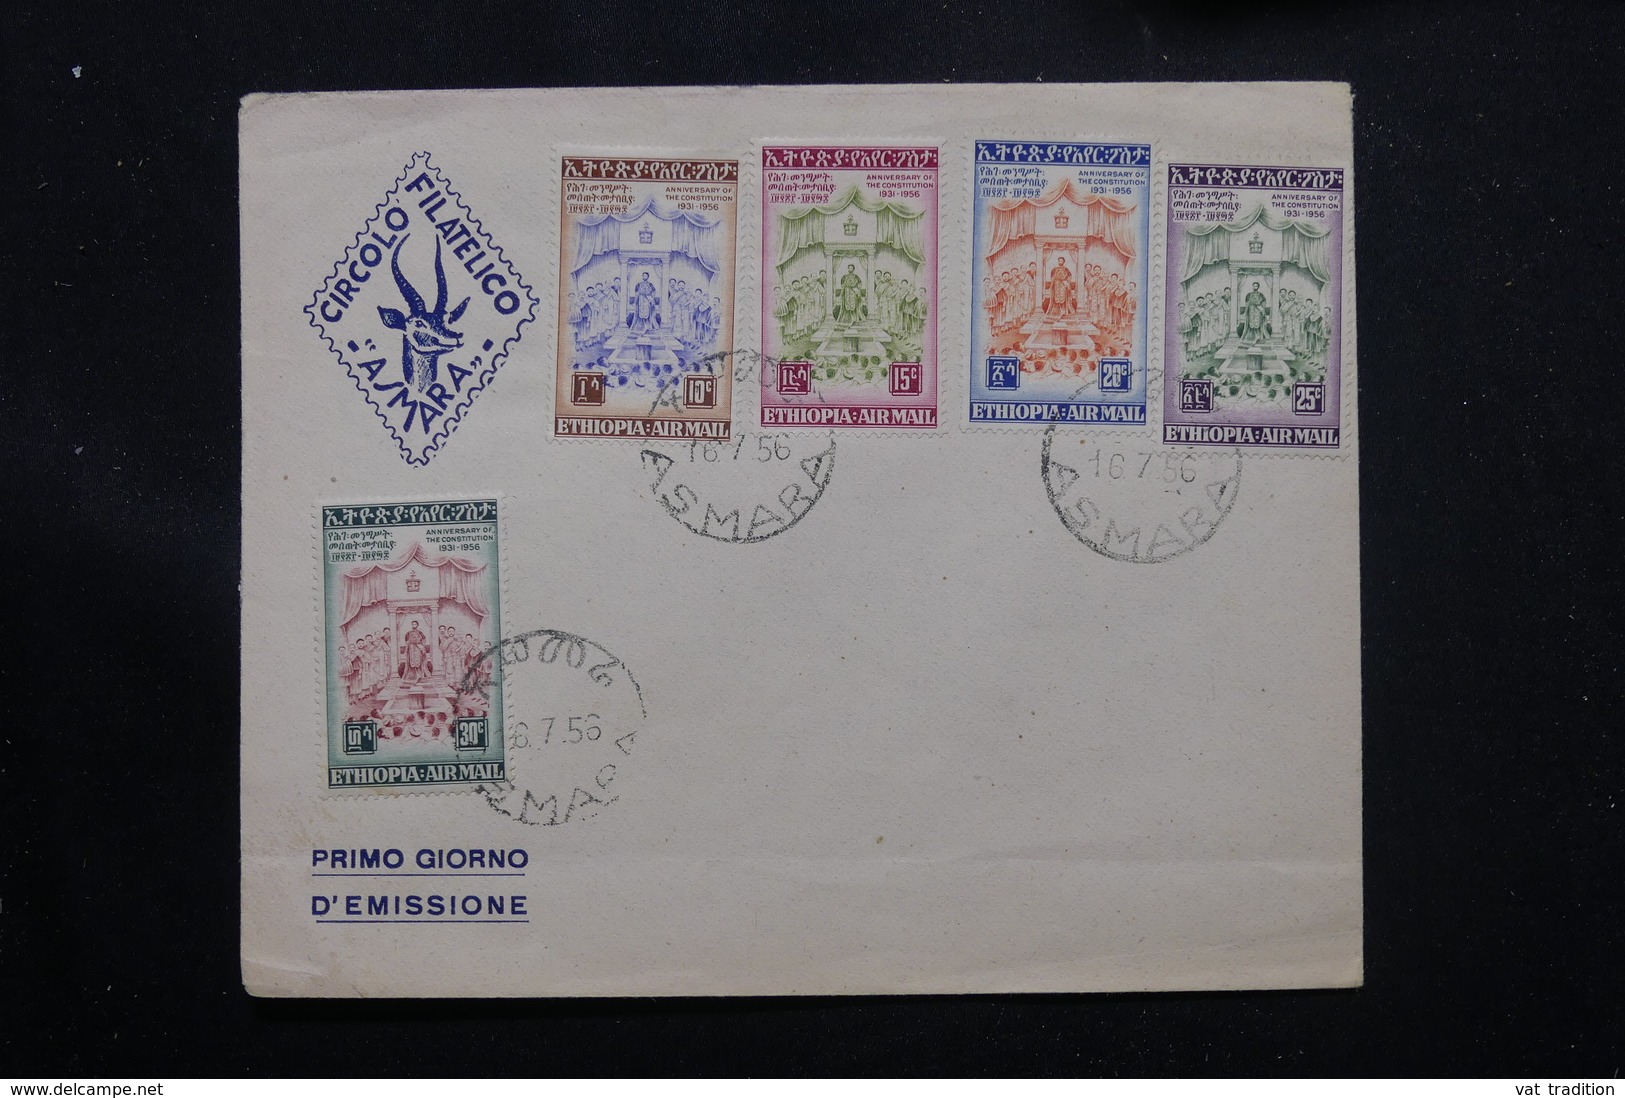 ETHIOPIE - Enveloppe FDC En 1956 - 25 Ans De La Constitution De L 'Ethiopie - L 60290 - Ethiopia